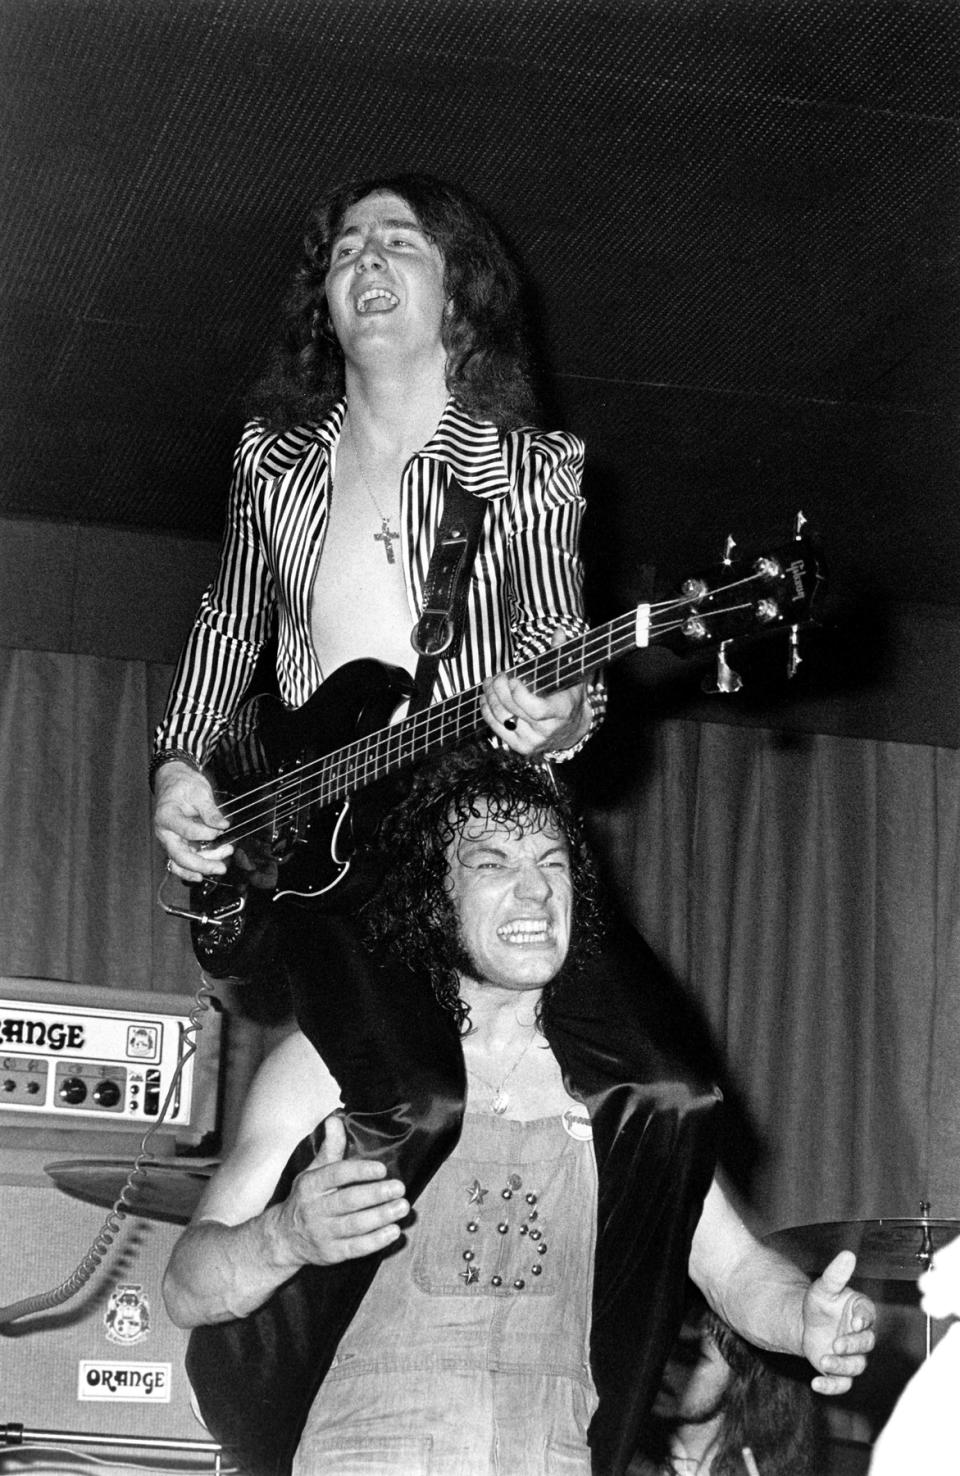 DENMARK - JANUARY 01:  Photo of GEORDIE; ID# GeordieB 25, Geordie with Brian Johnson (later AC/DC), 1973, Copenhagen  (Photo by Jorgen Angel/Redferns)